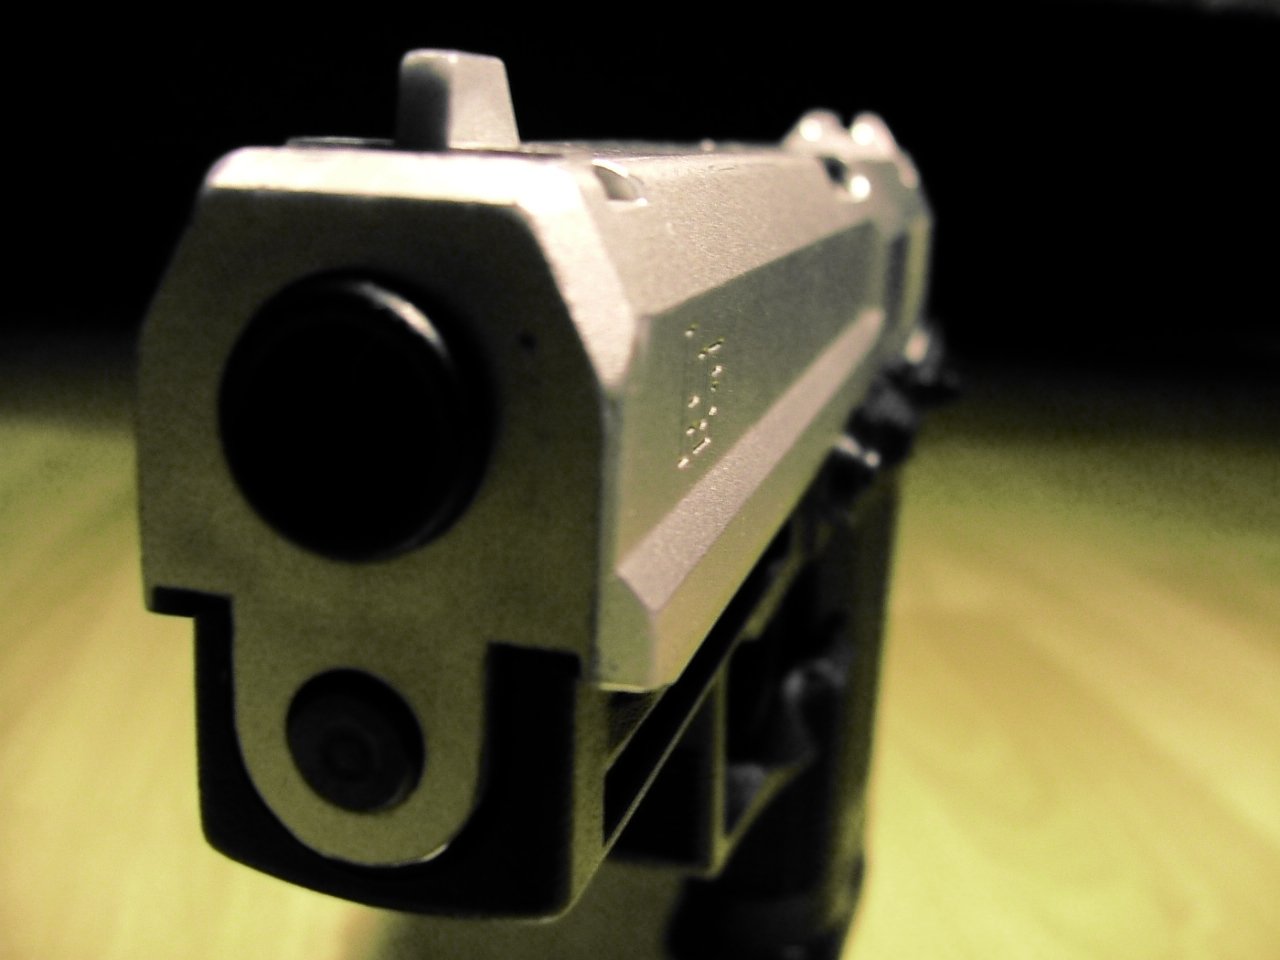 a close up of a close up of a gun